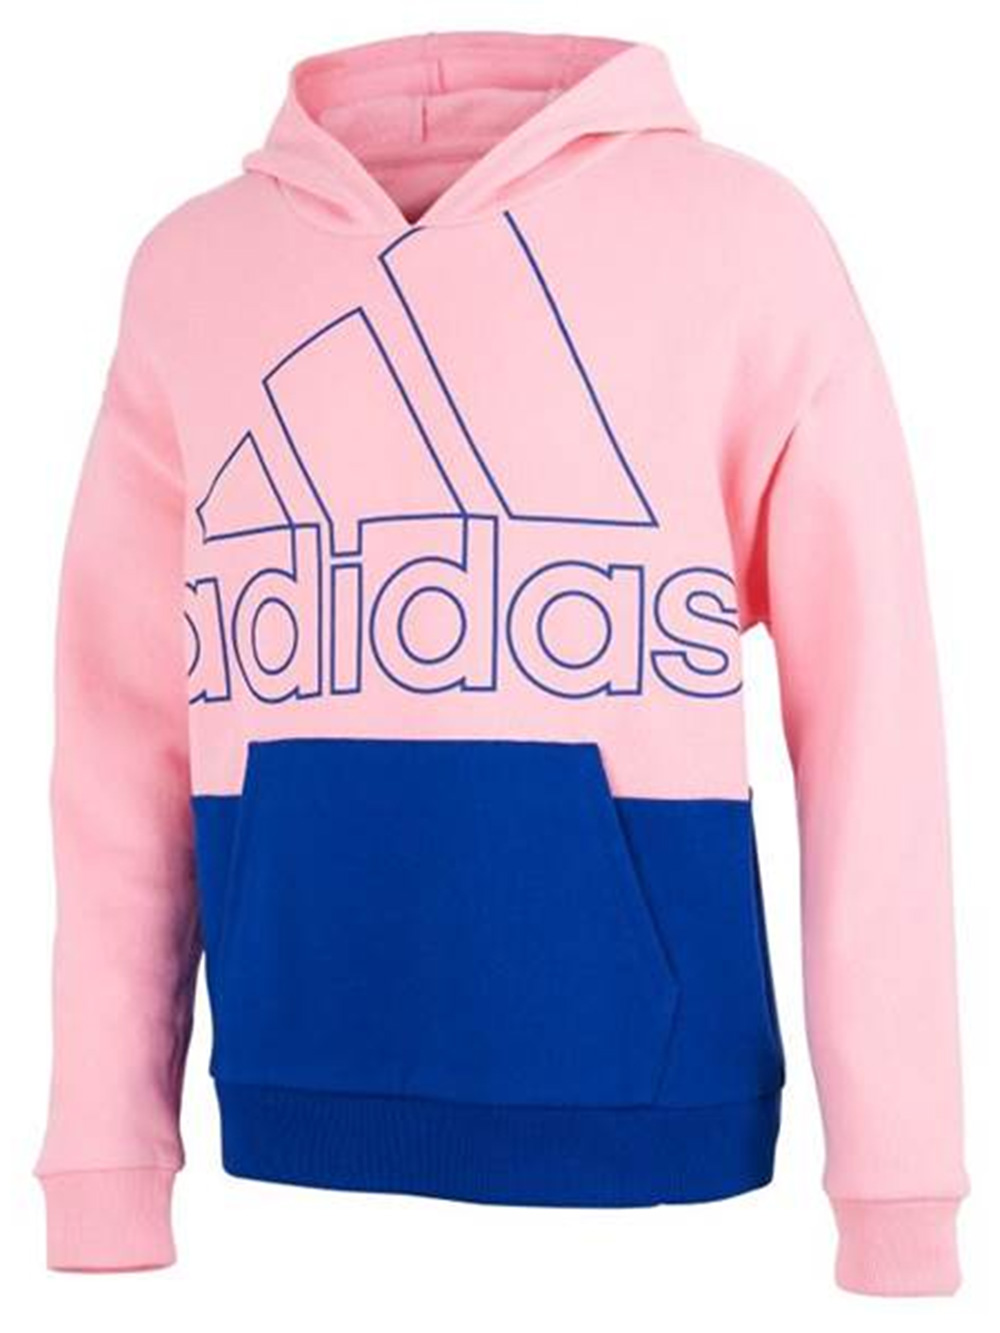 adidas pink hoodie girls